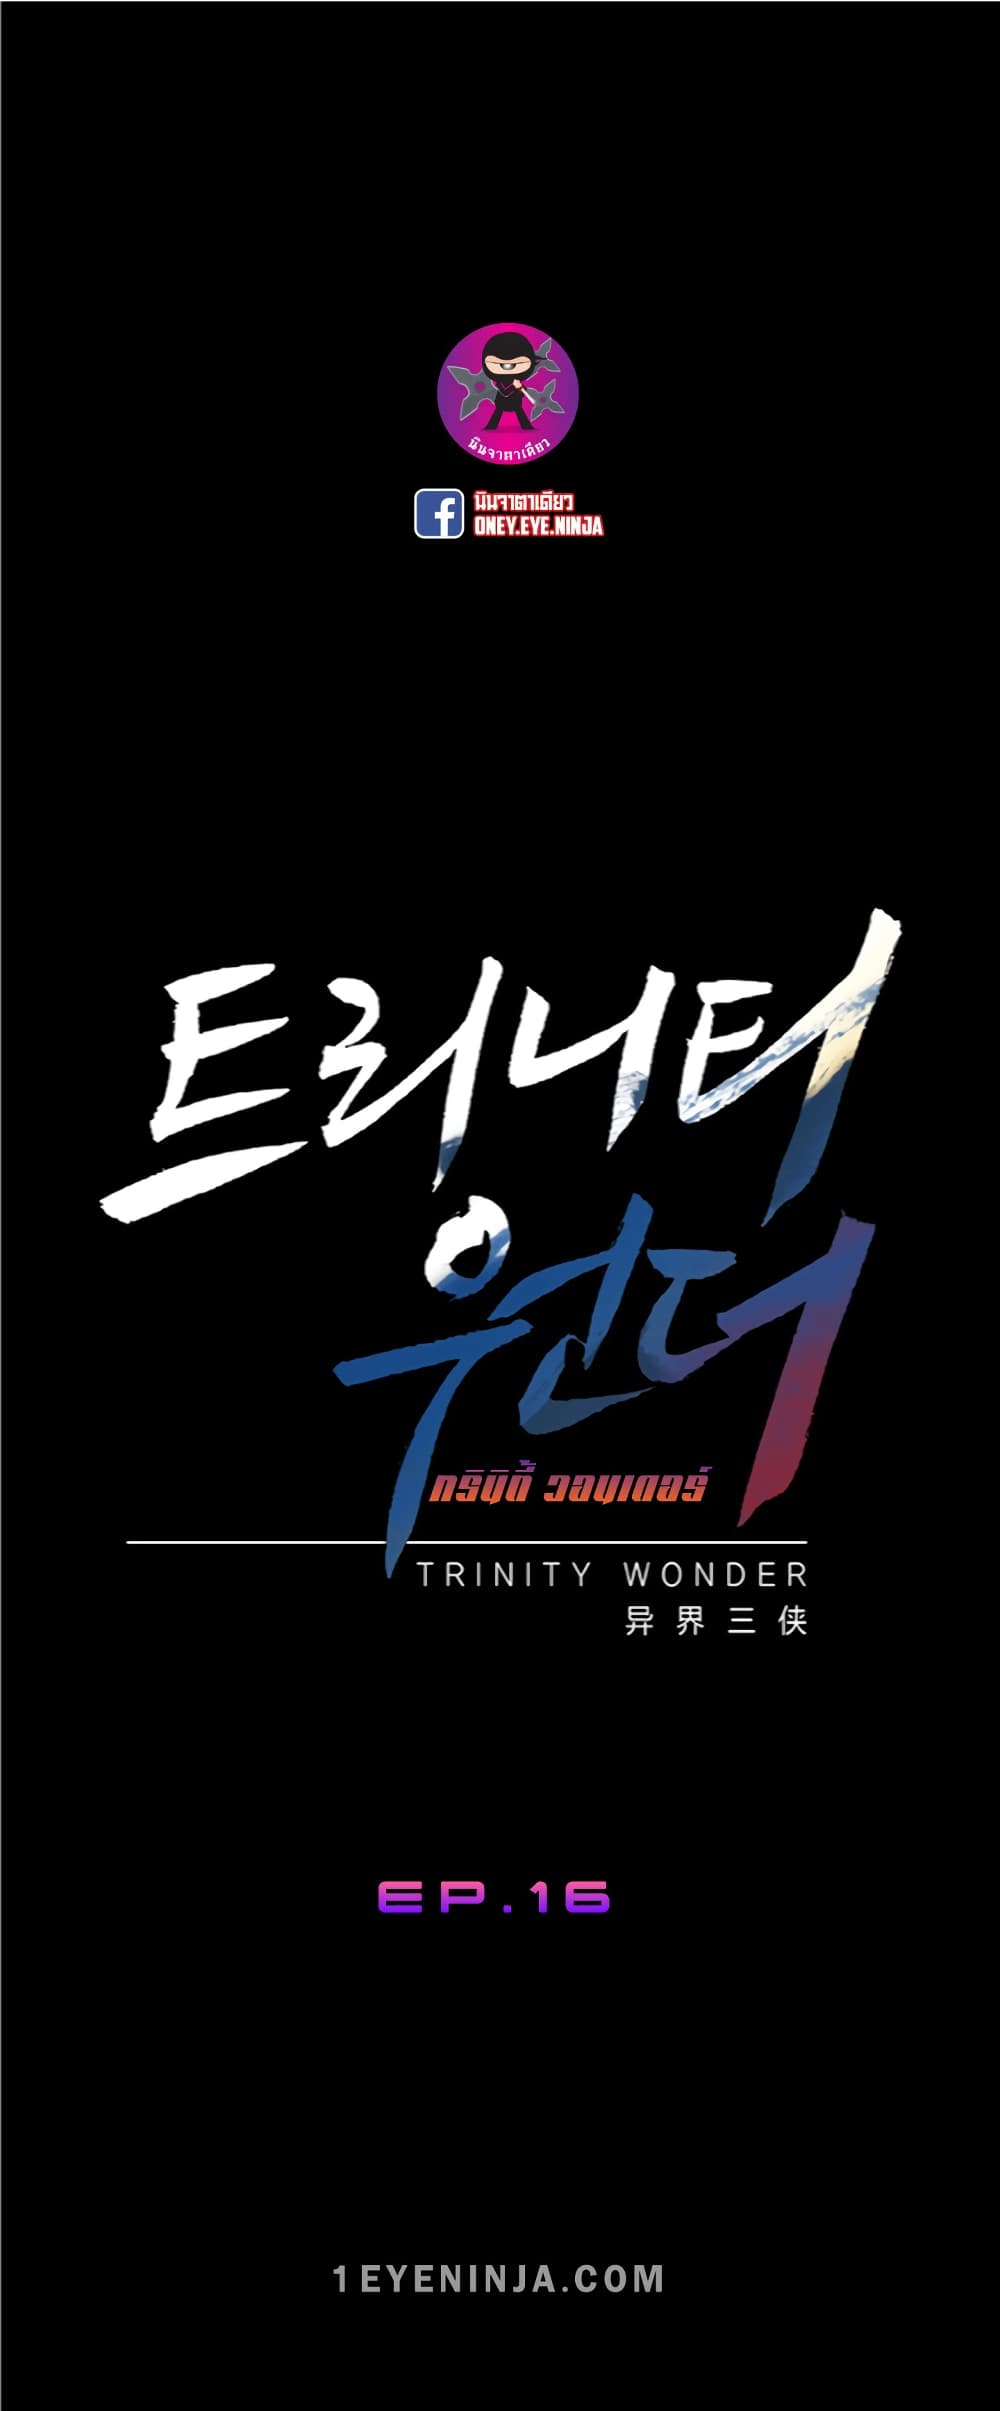 Trinity Wonder 16 (2)